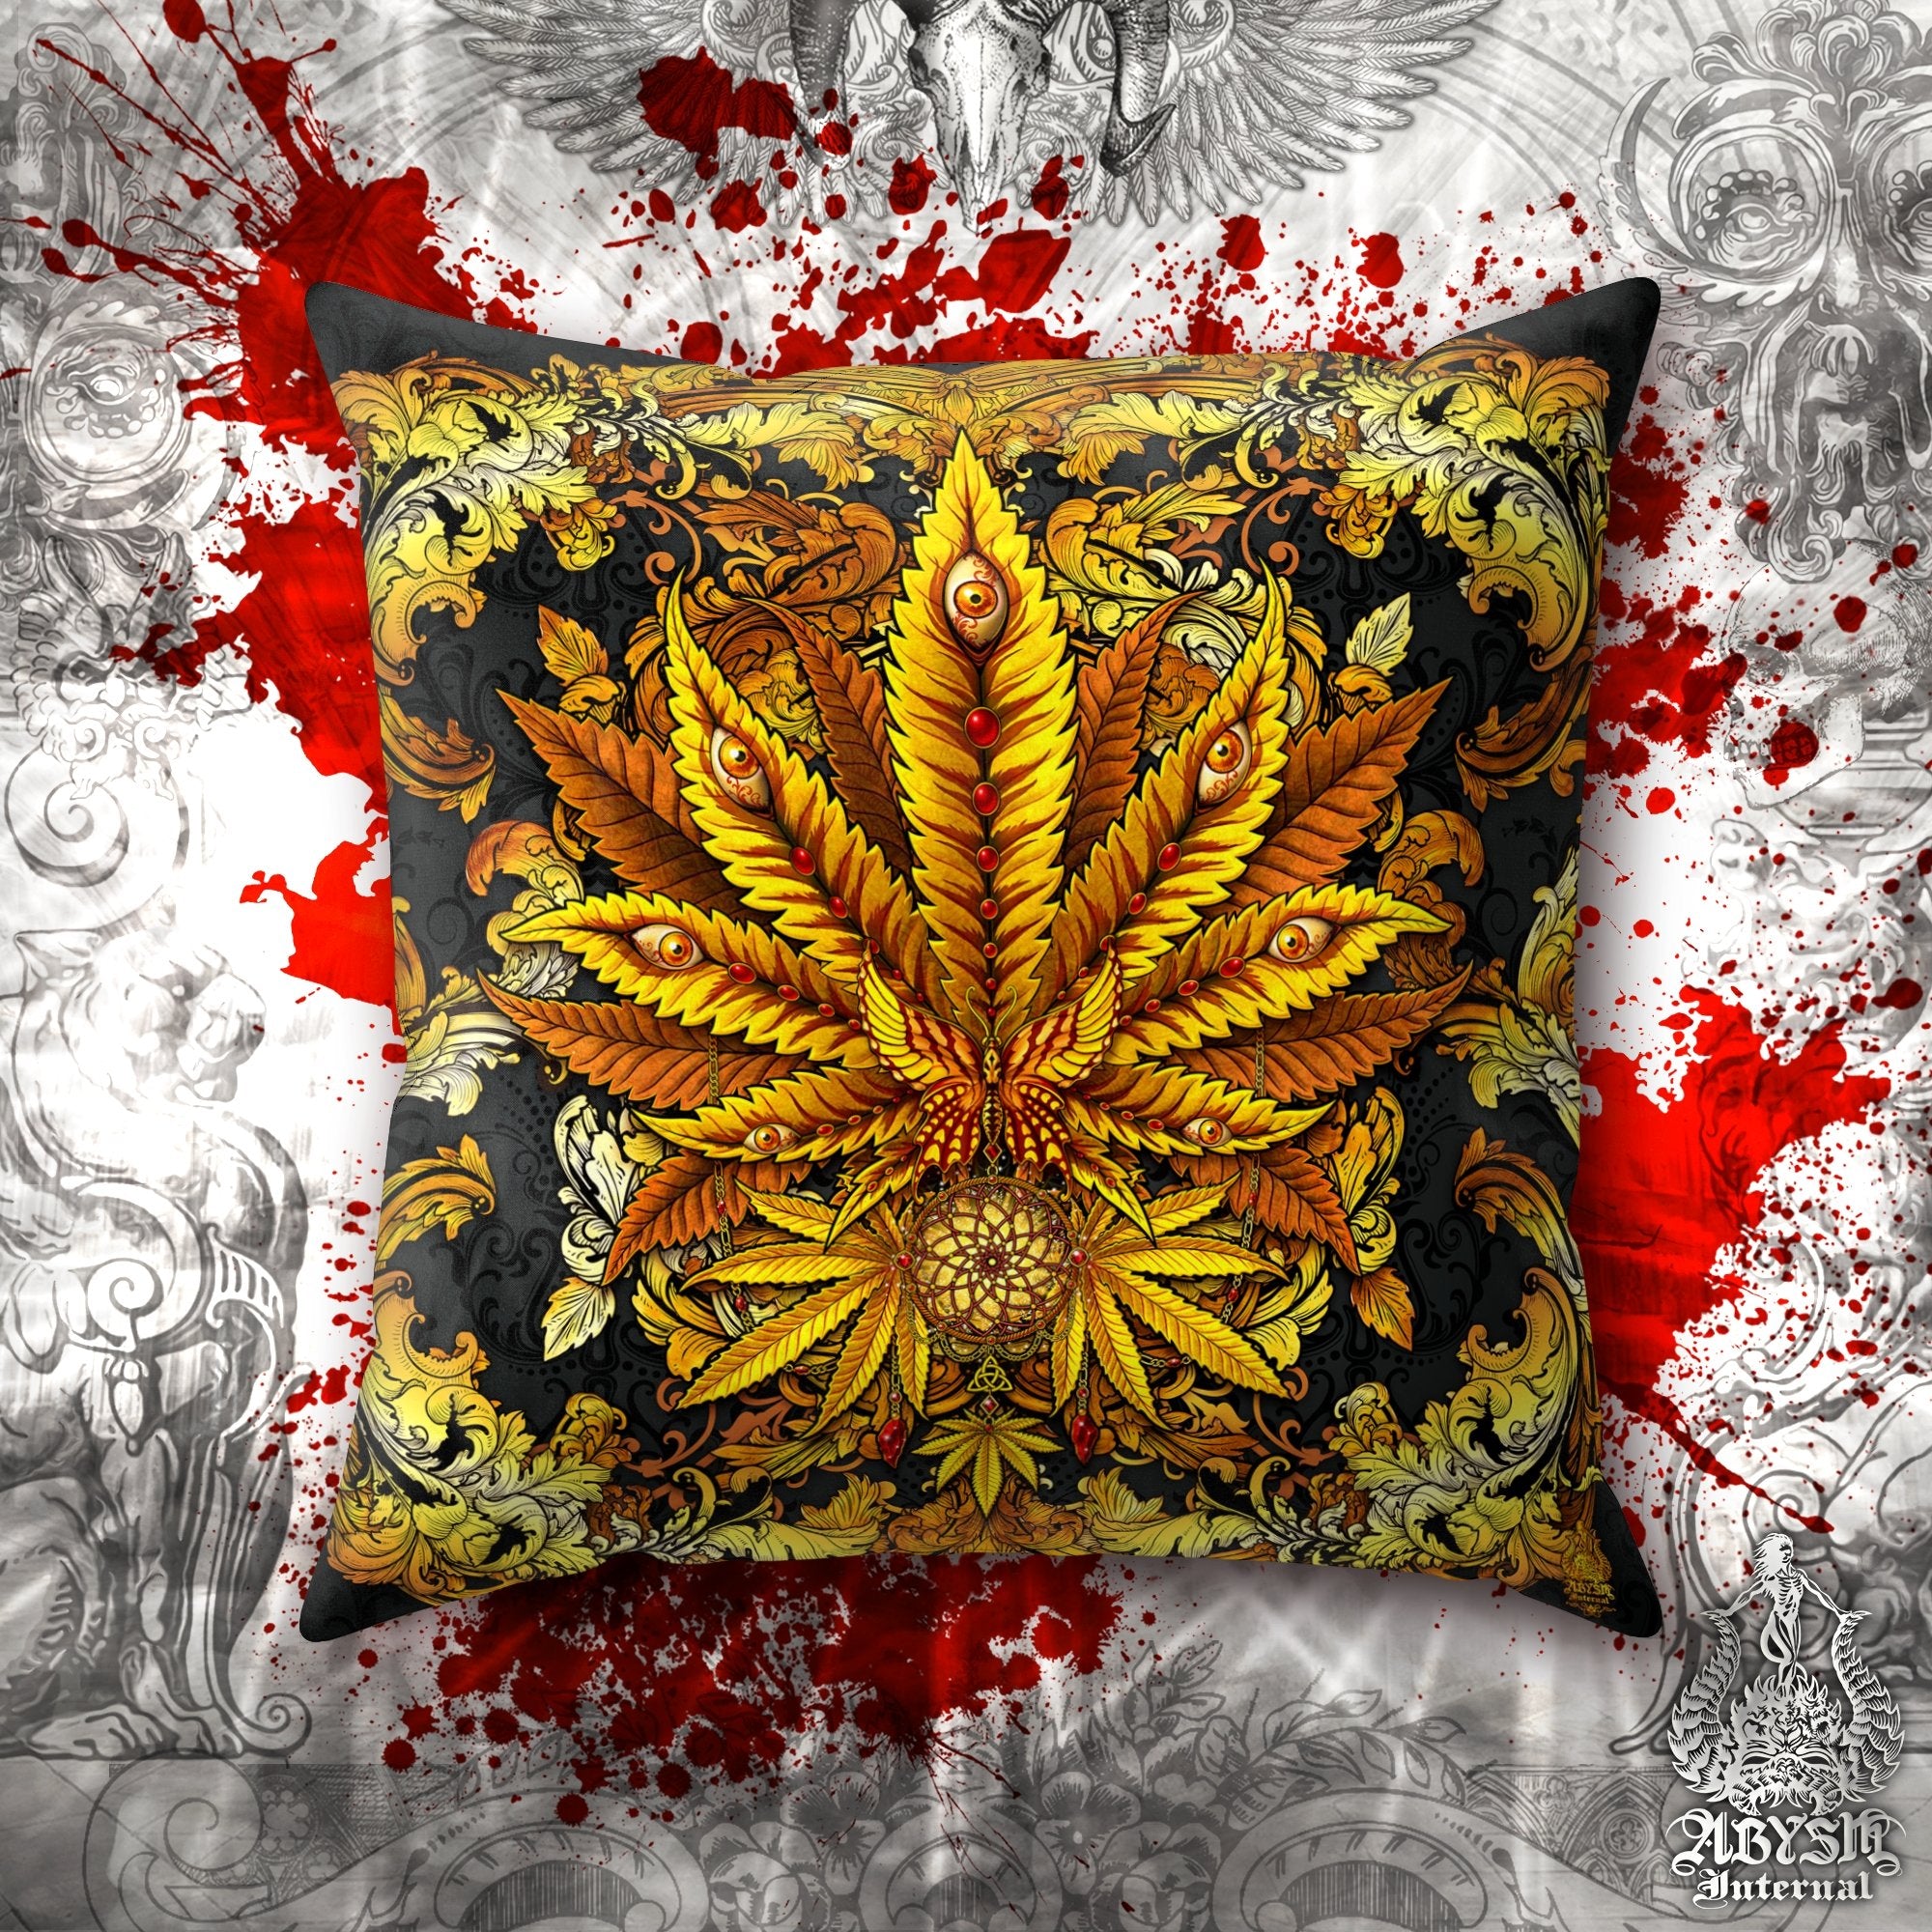 Weed Throw Pillow, Cannabis Shop Decor, Indie Decorative Accent Cushion, Alternative Room Decor, 420 Art Print - Gold - Abysm Internal